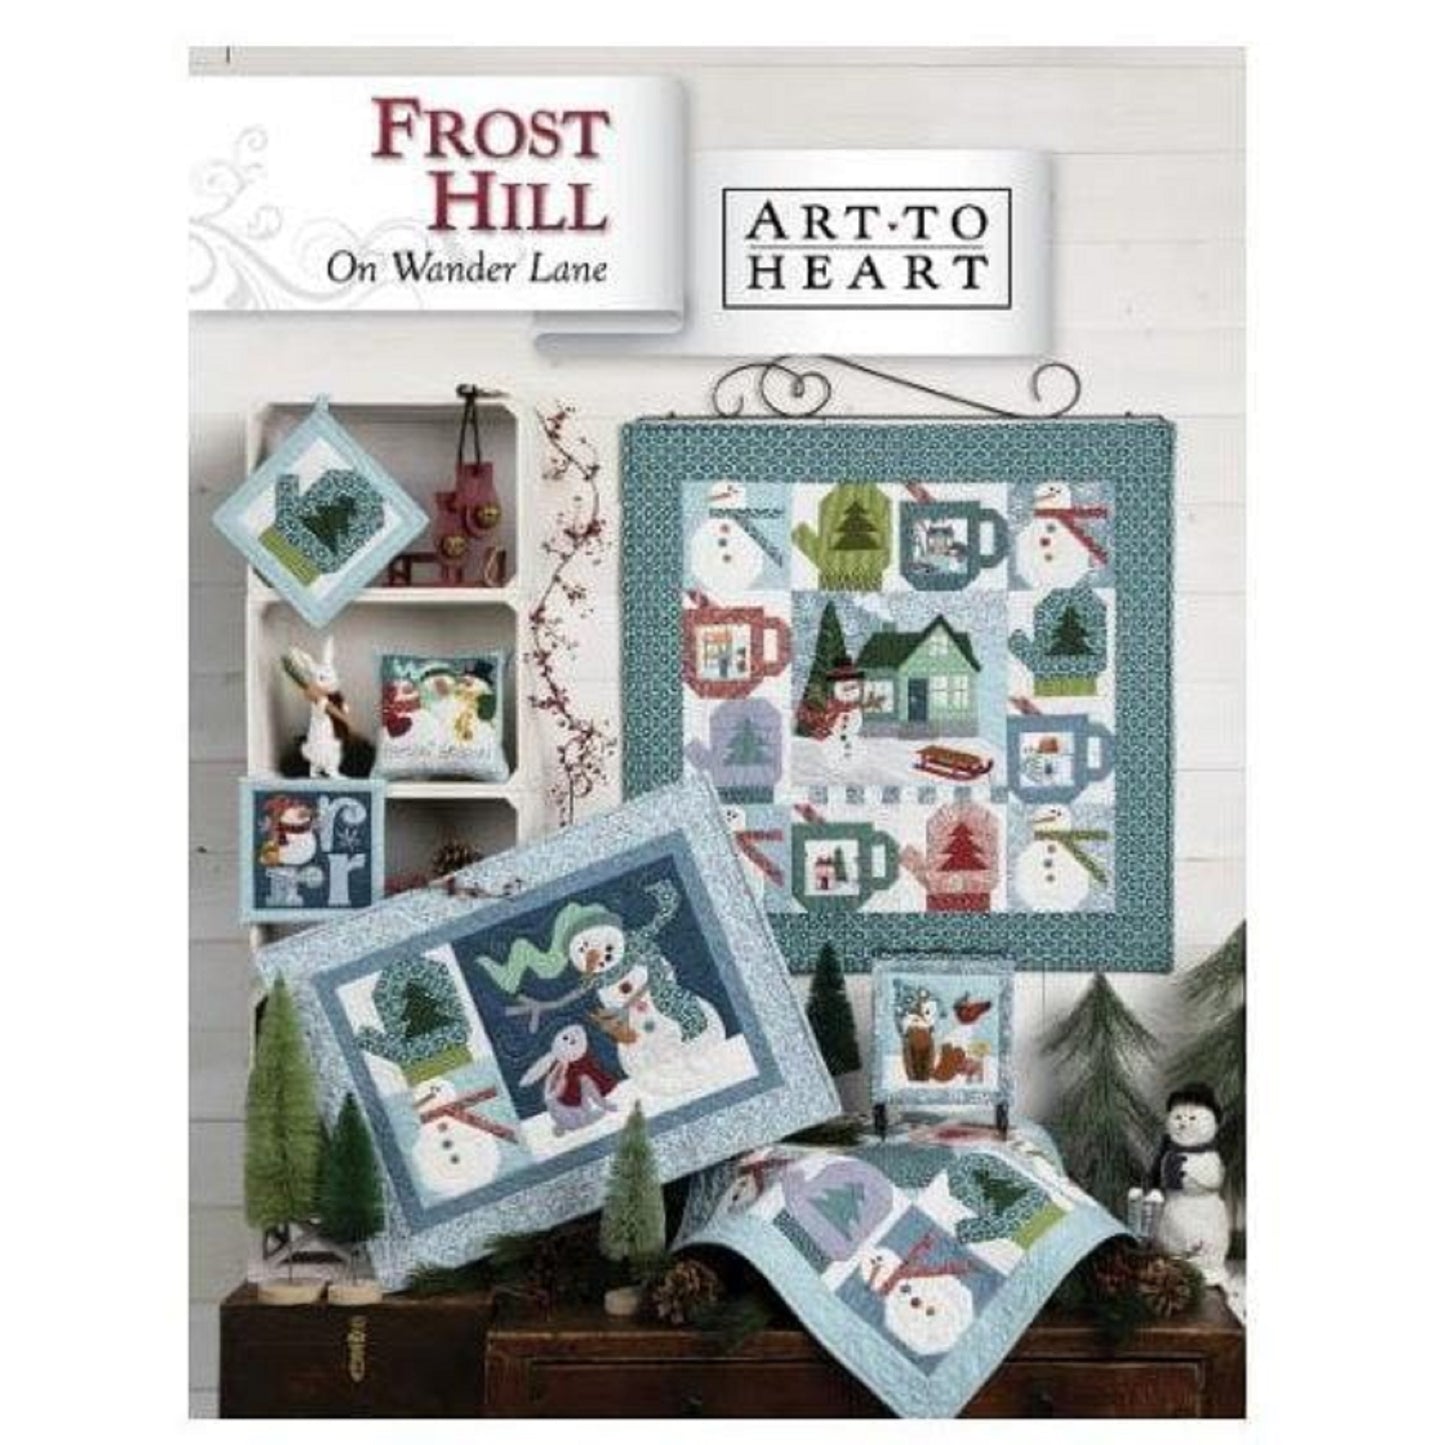 Frost Hill On Wander Lane-Art-To-Heart Book